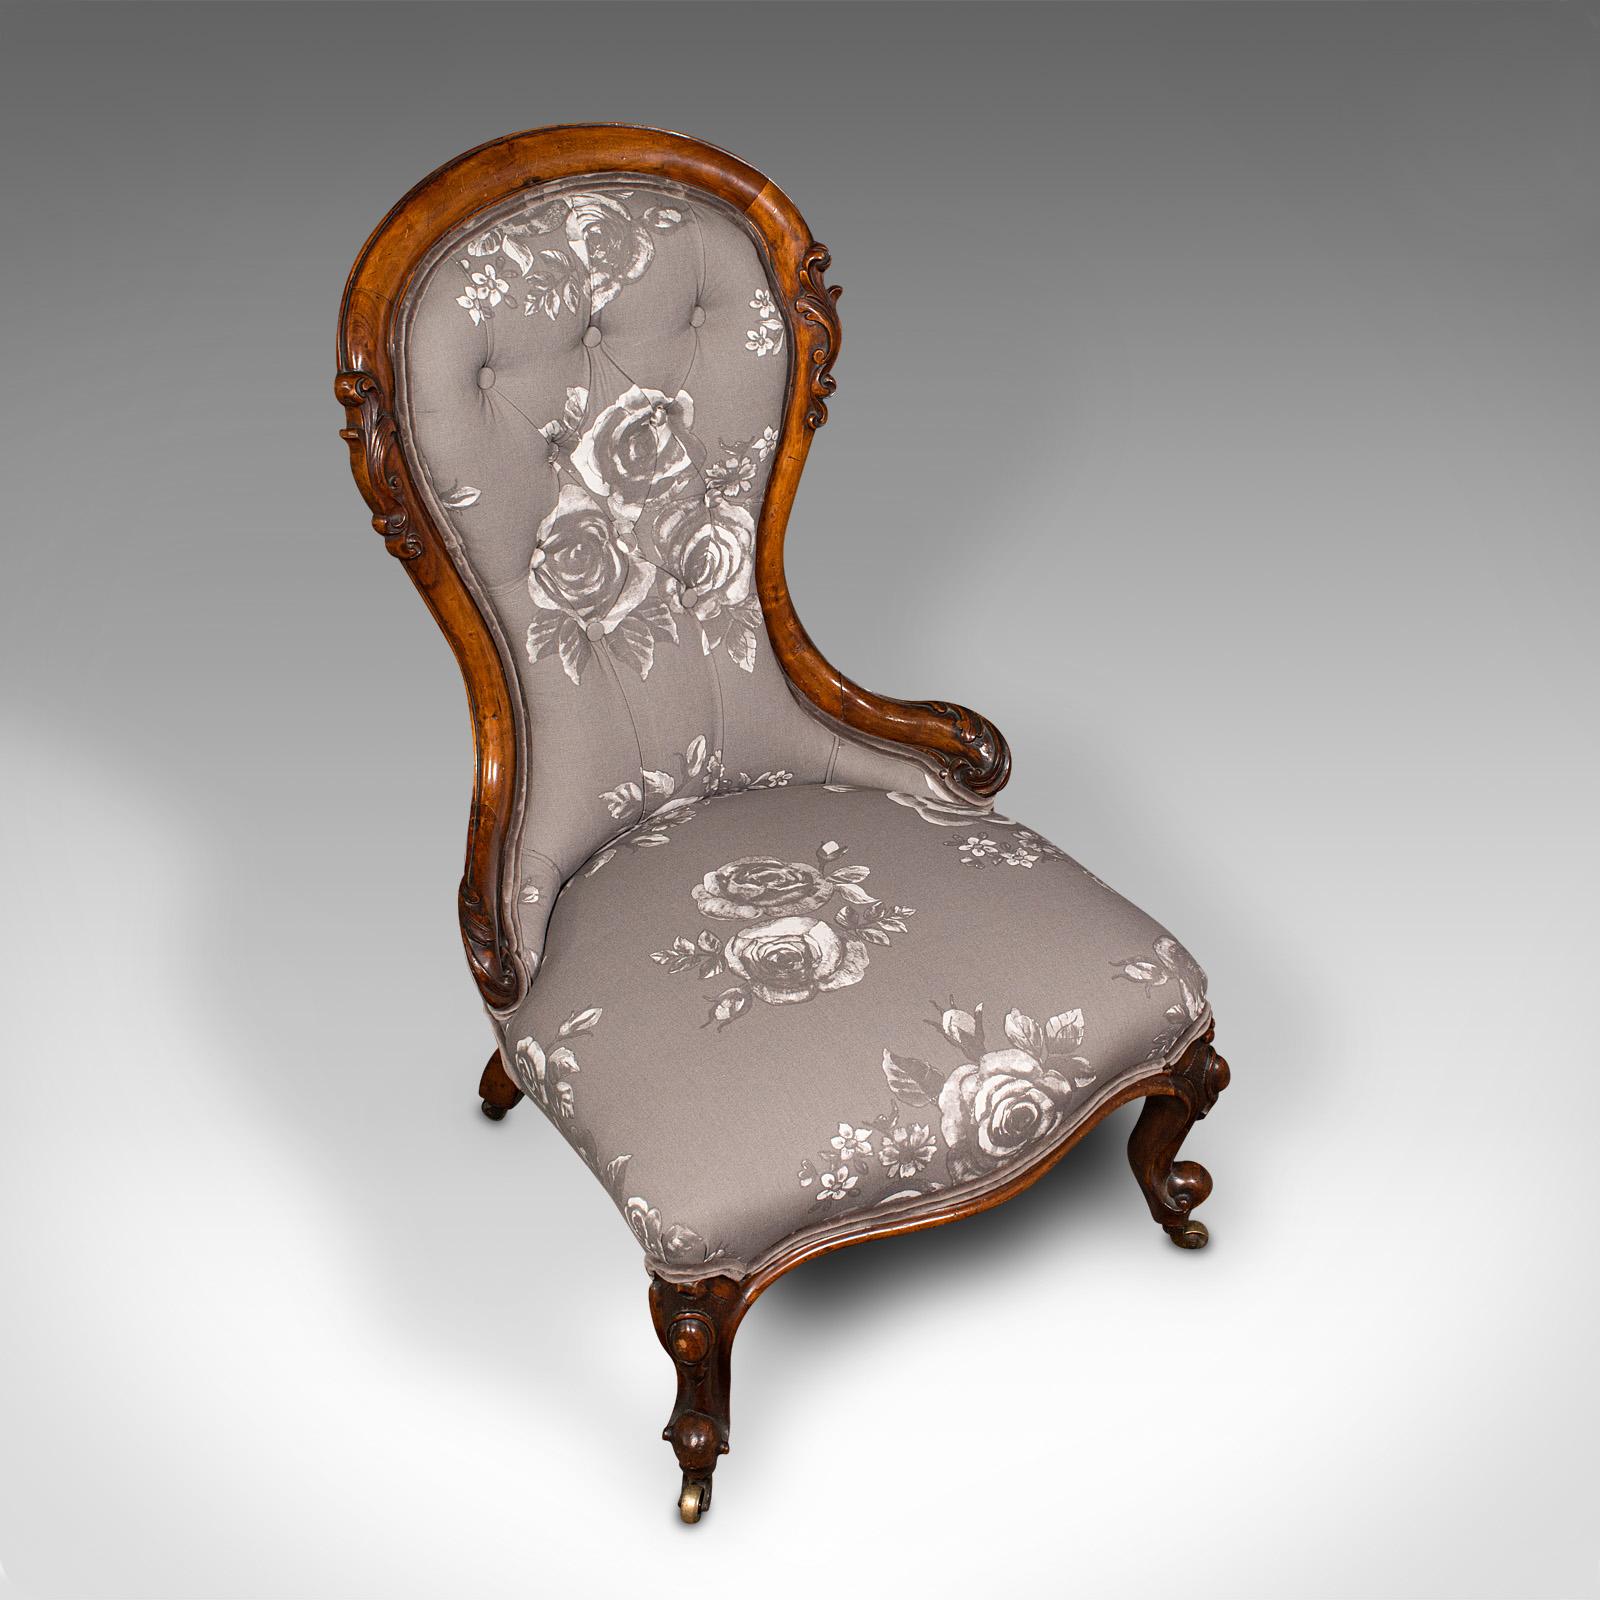 19th Century Antique Button Back Salon Chair English Walnut Spoon Seat Victorian circa 1840 For Sale